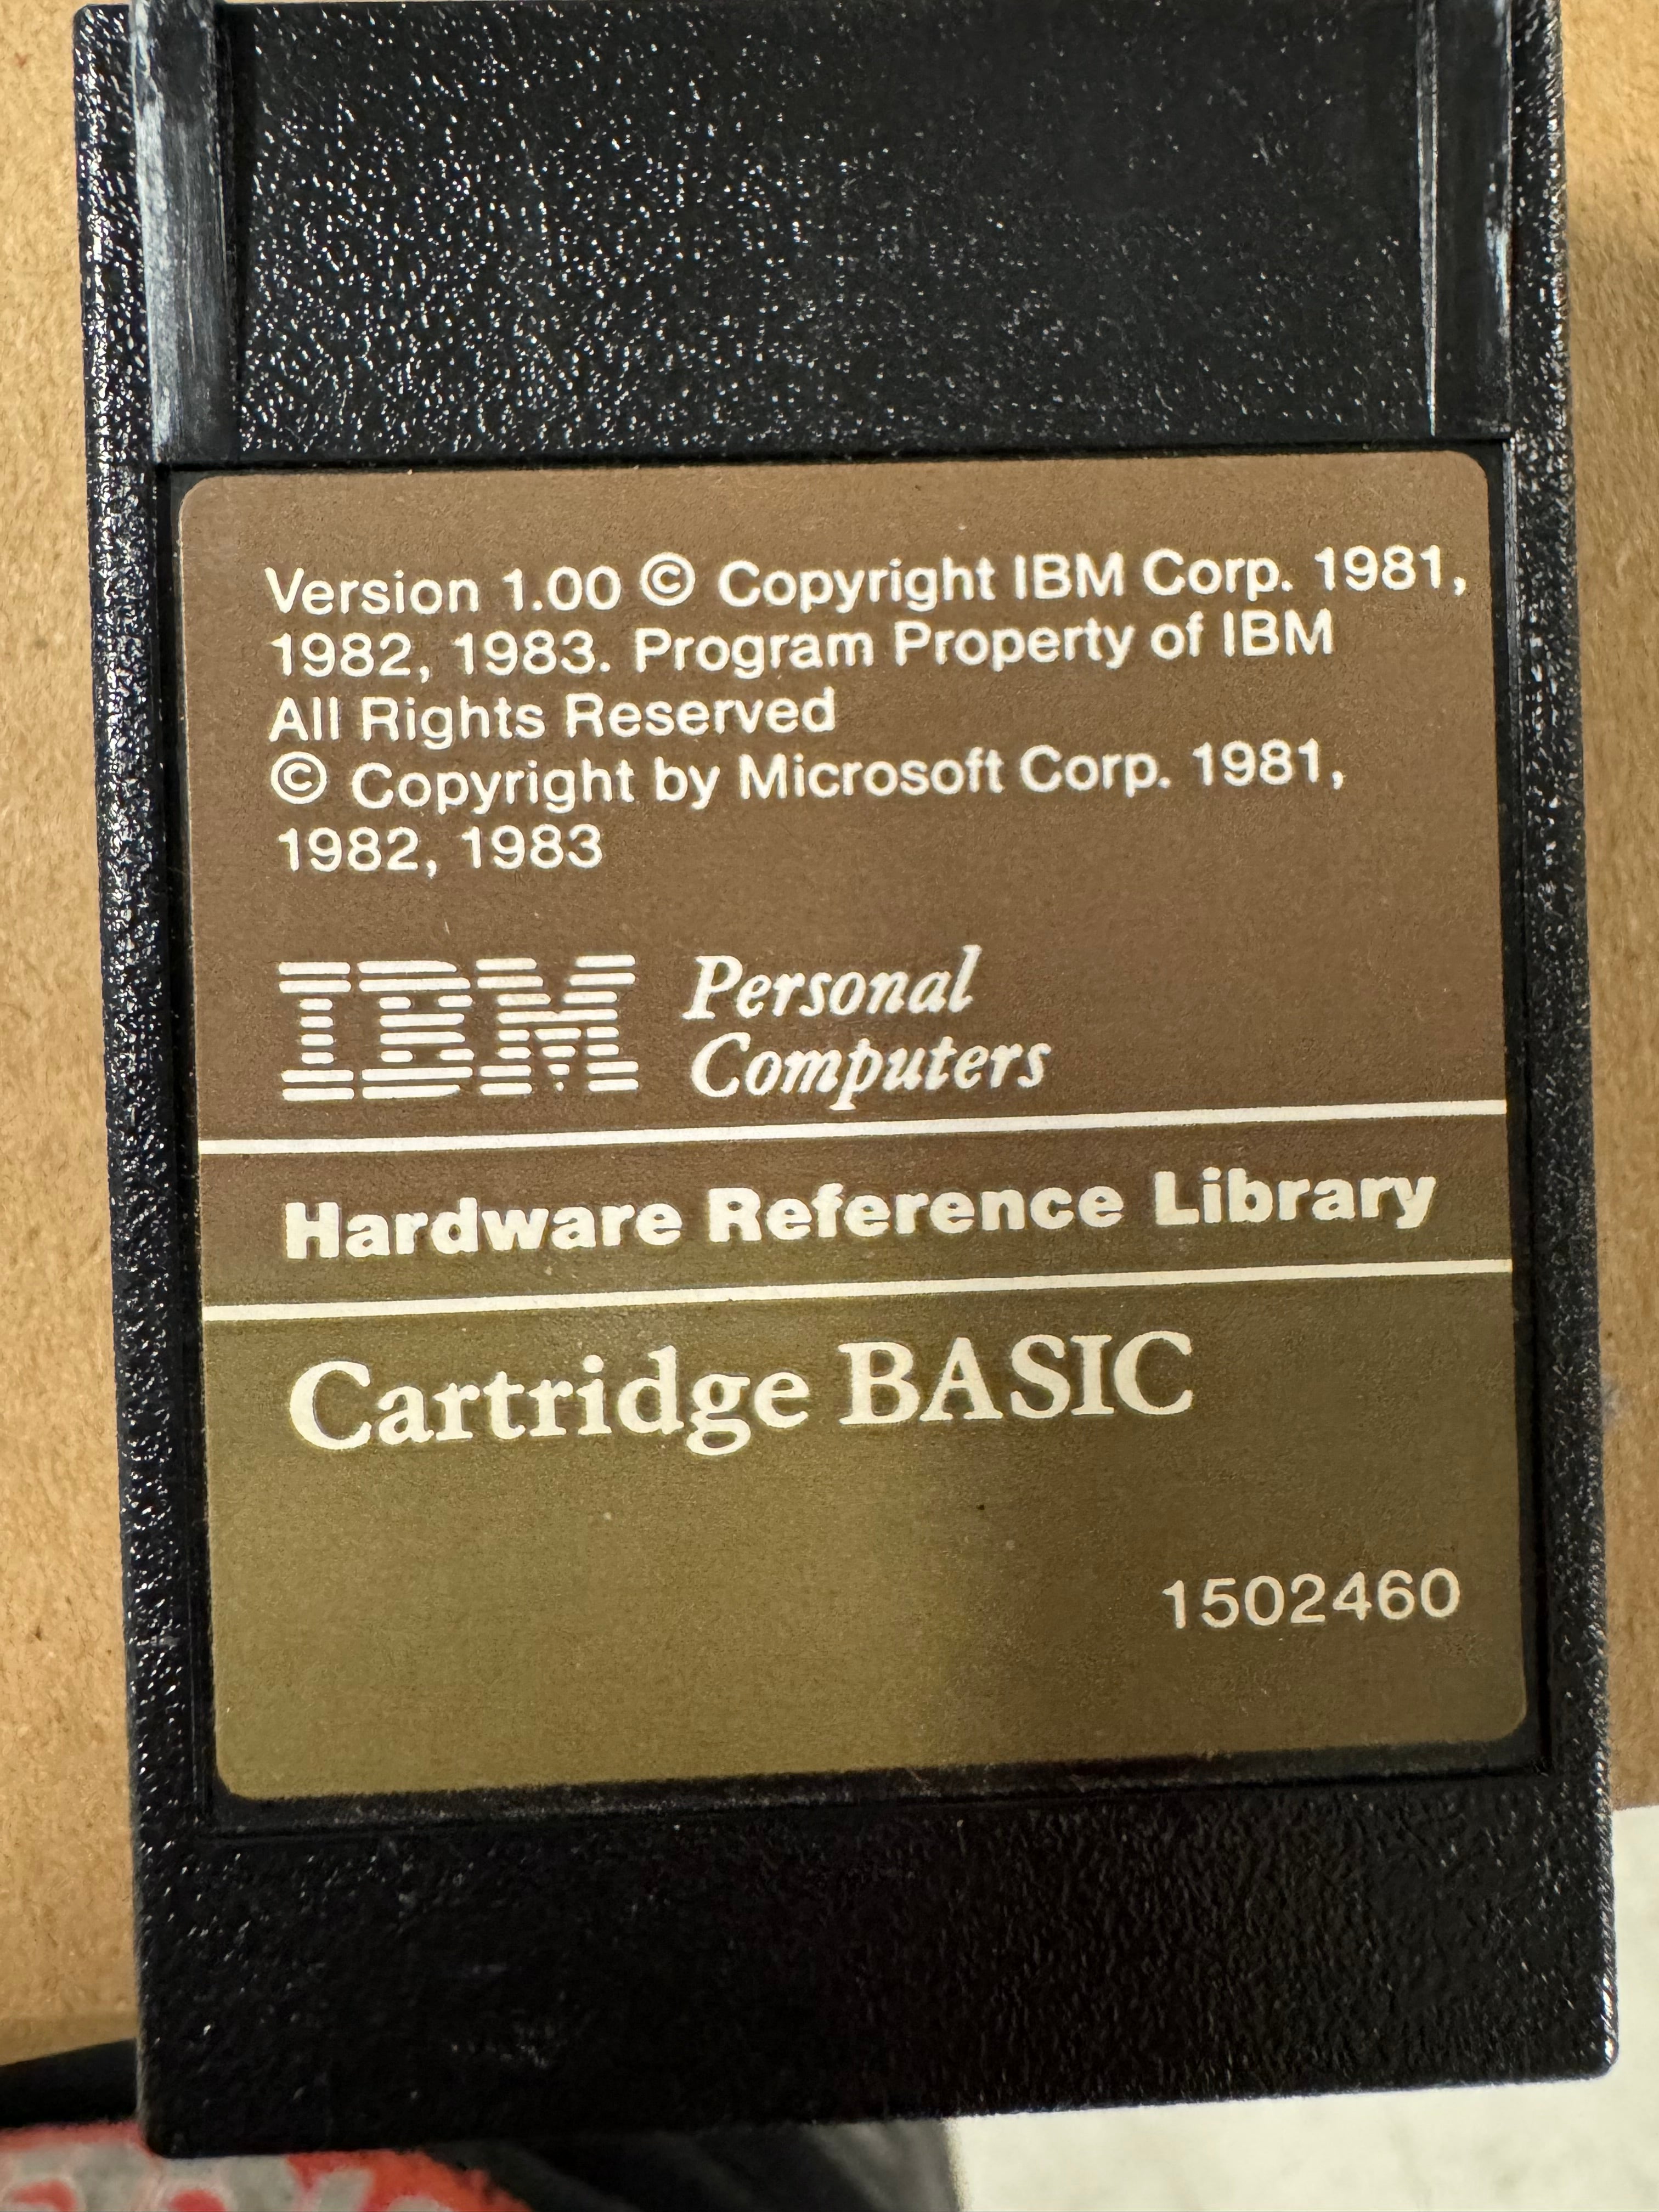 Cartridge BASIC